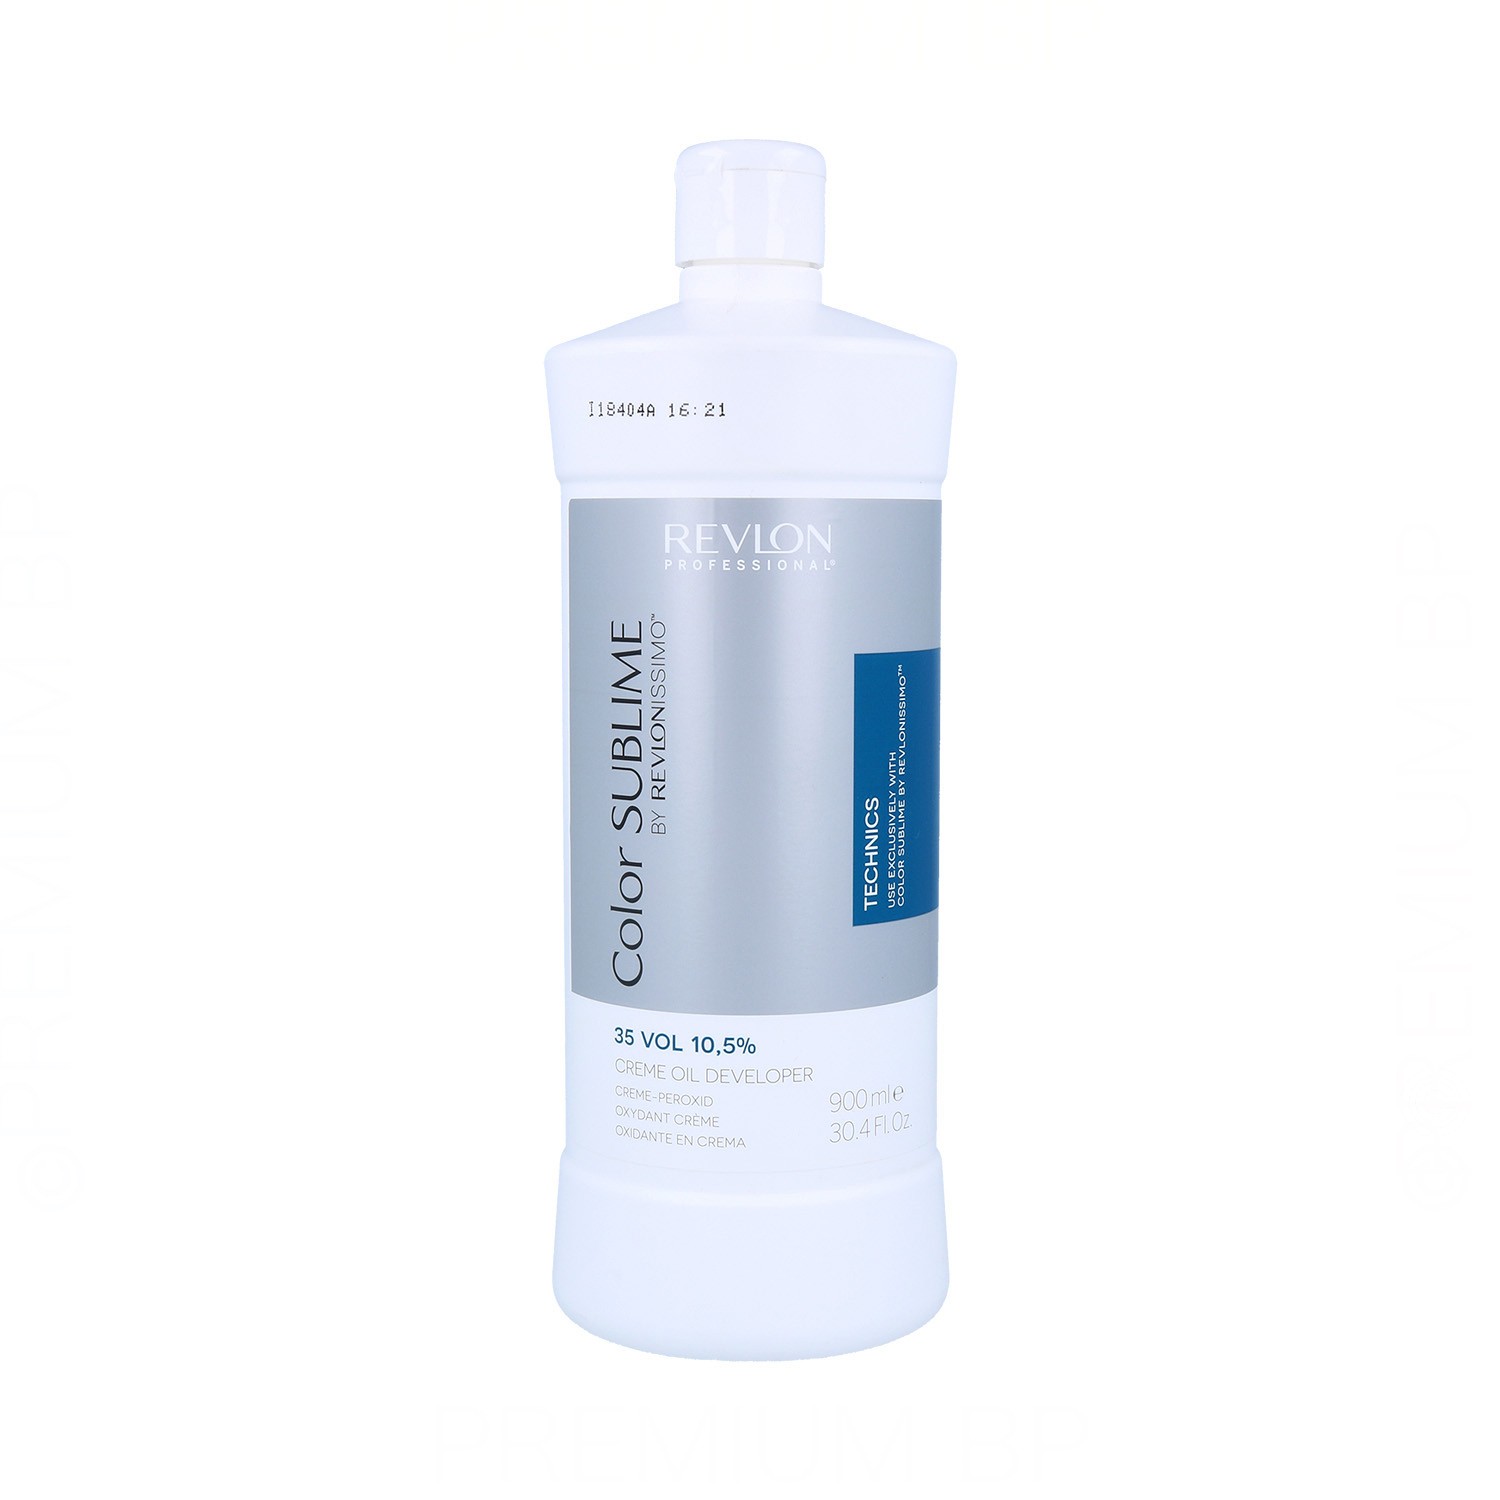 Revlonissimo Color Sublime Crema Oil Oxidante 35Vol (10.5%) 900 ml